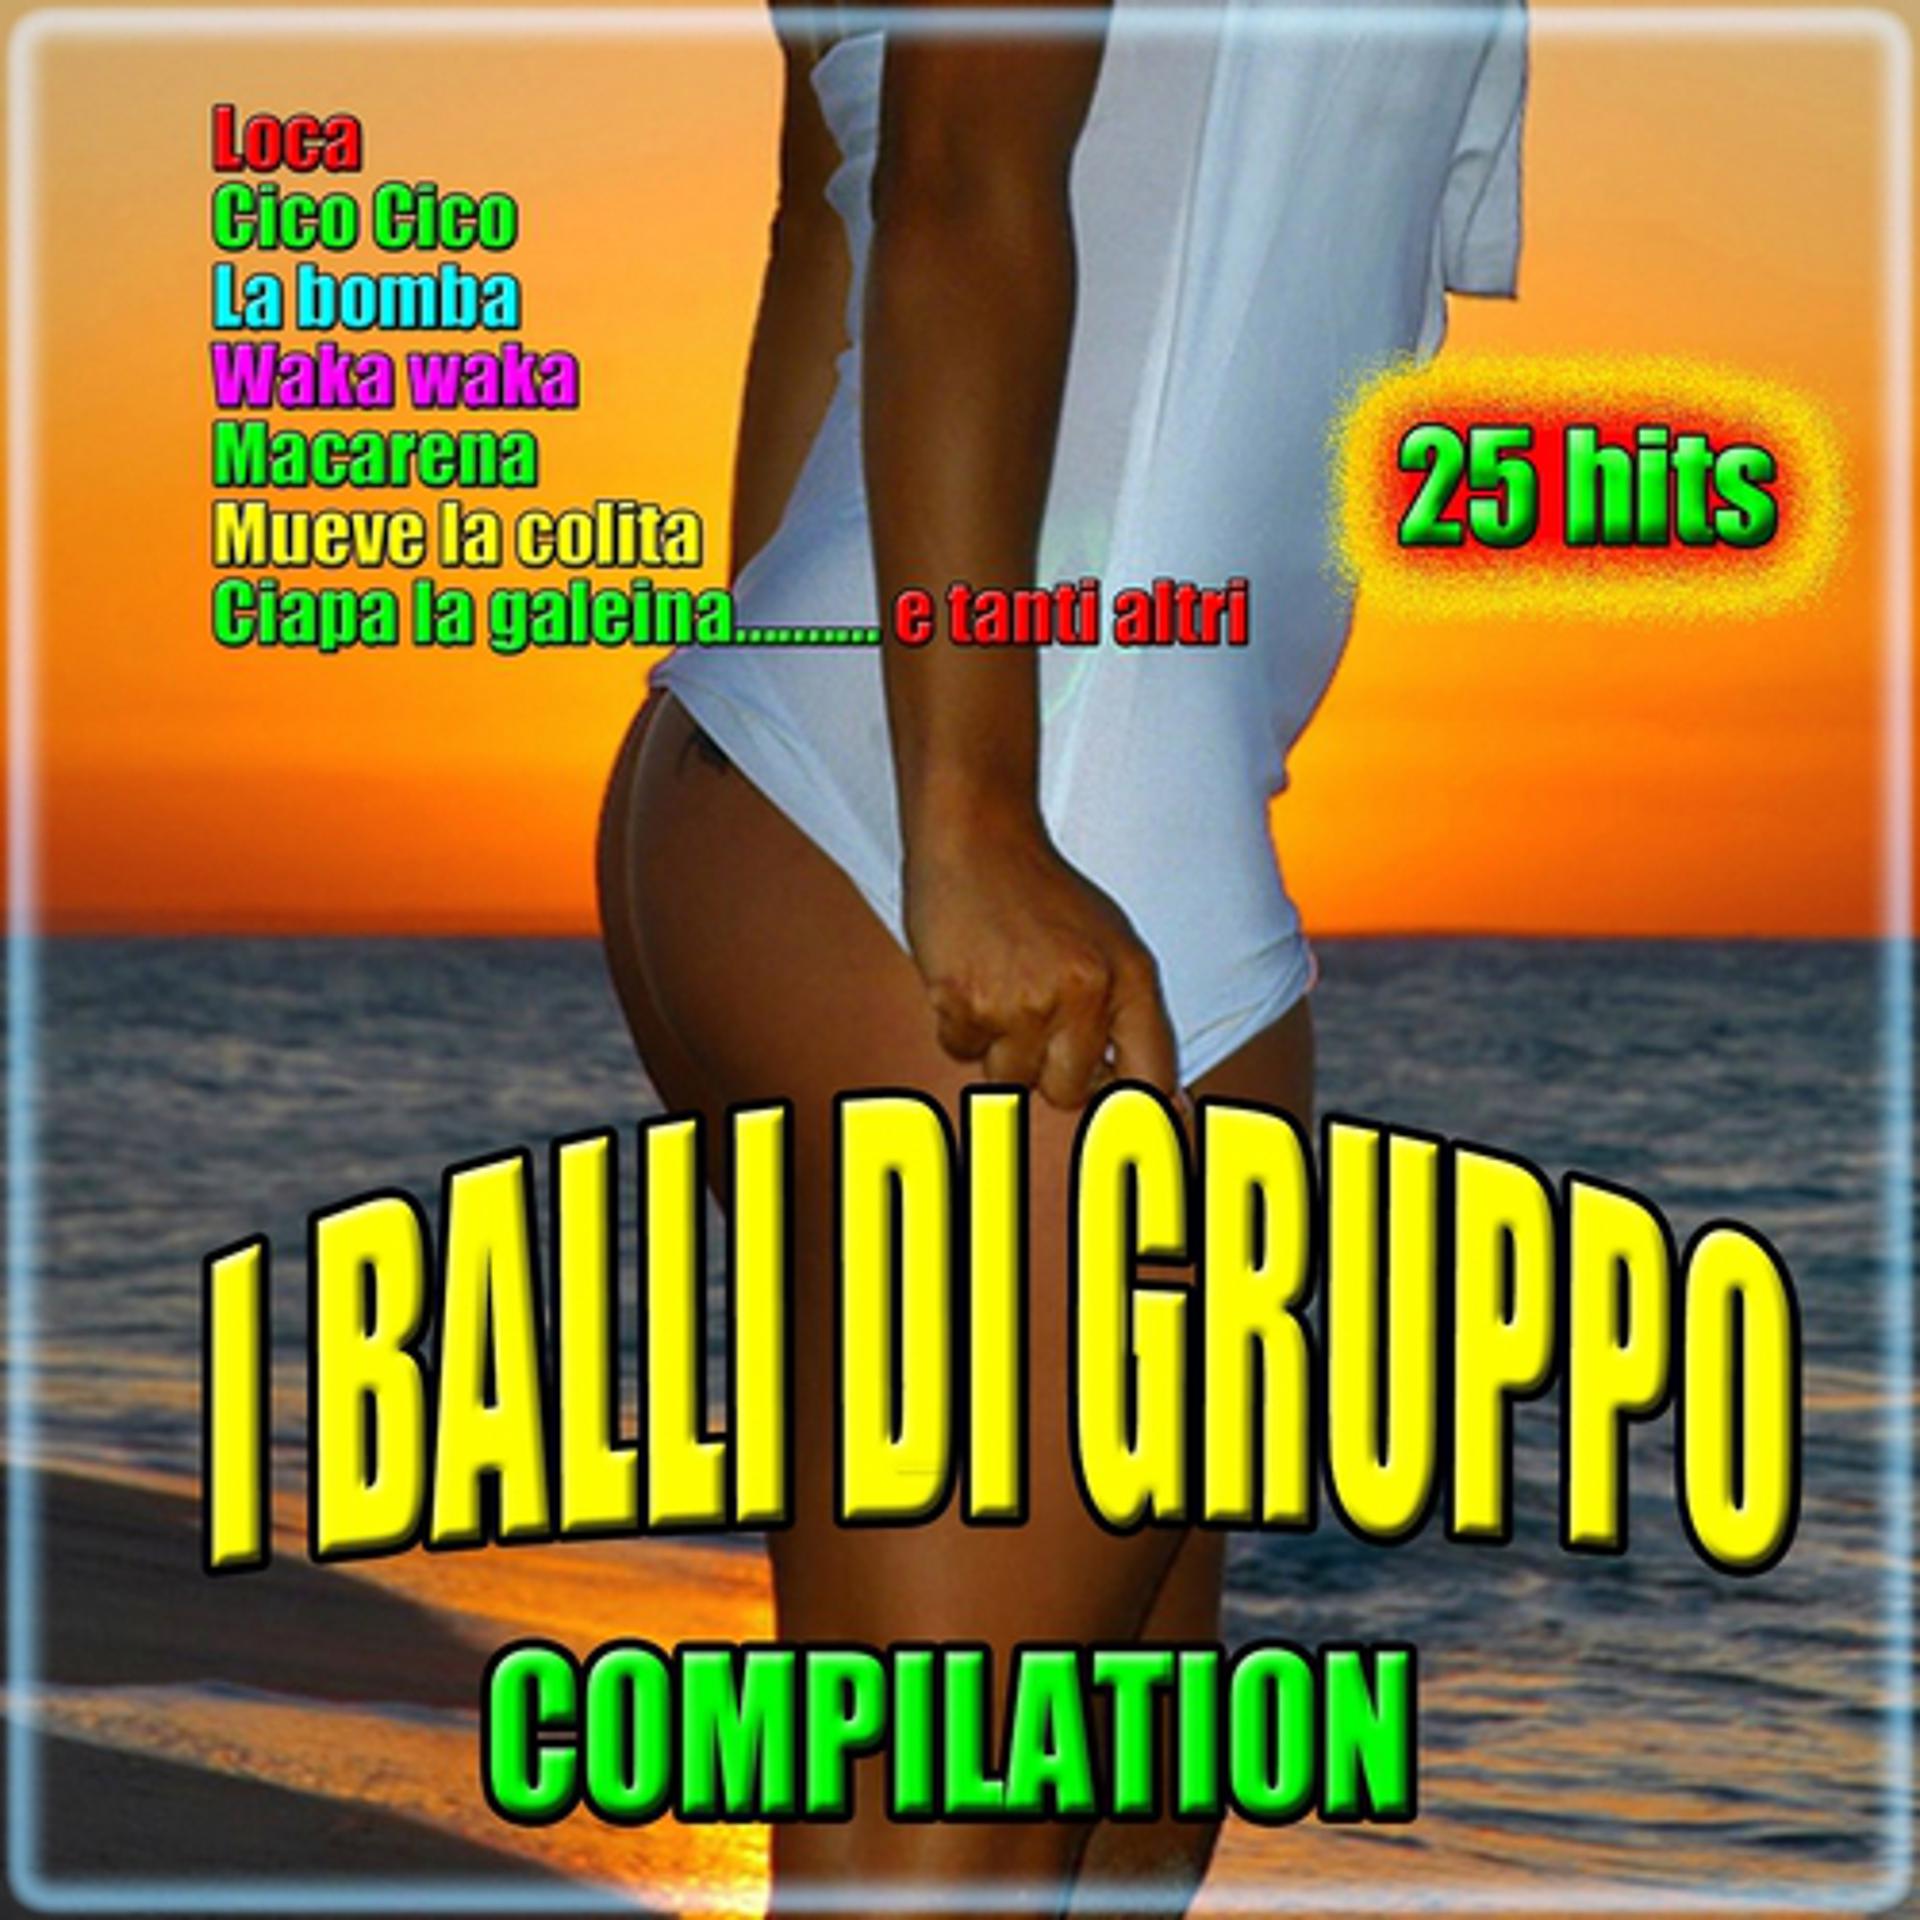 Постер альбома I balli di gruppo compilation